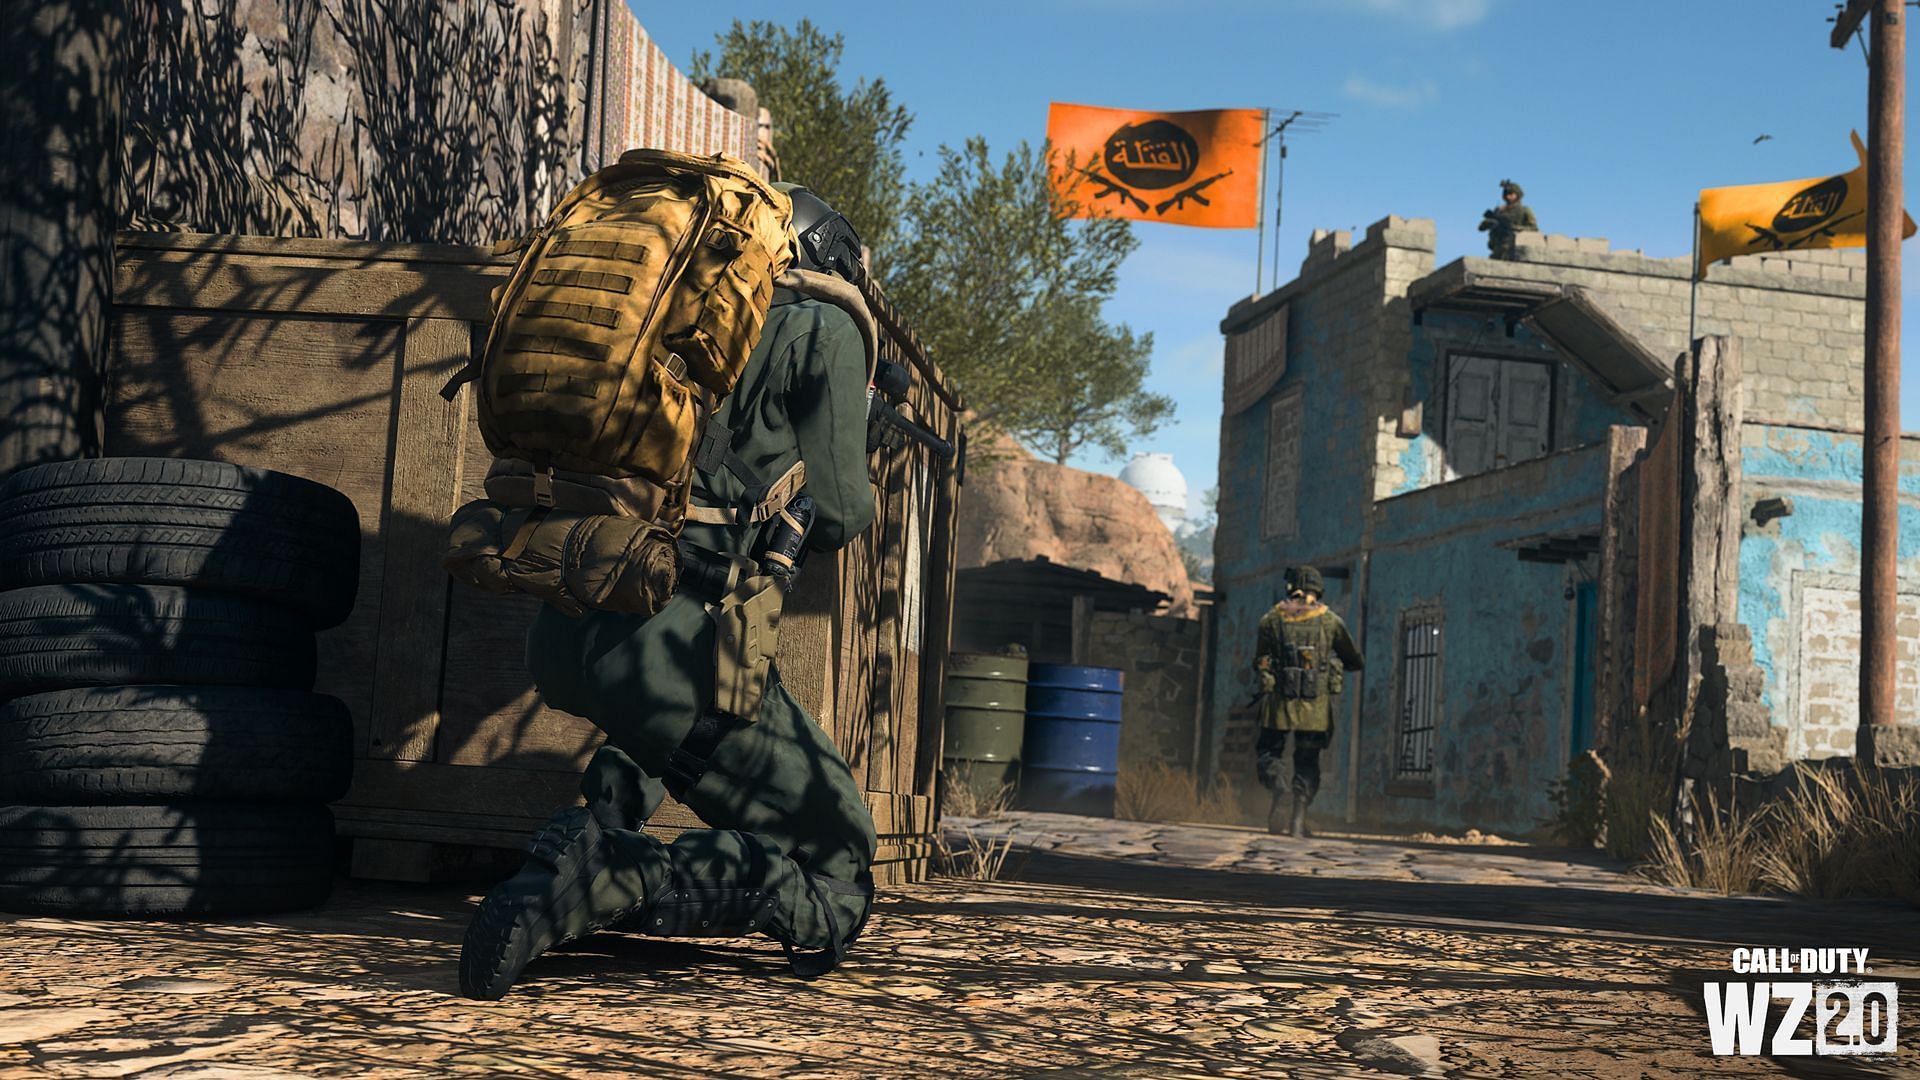 DMZ- A new way to play Warzone 2 (Image via Activision)